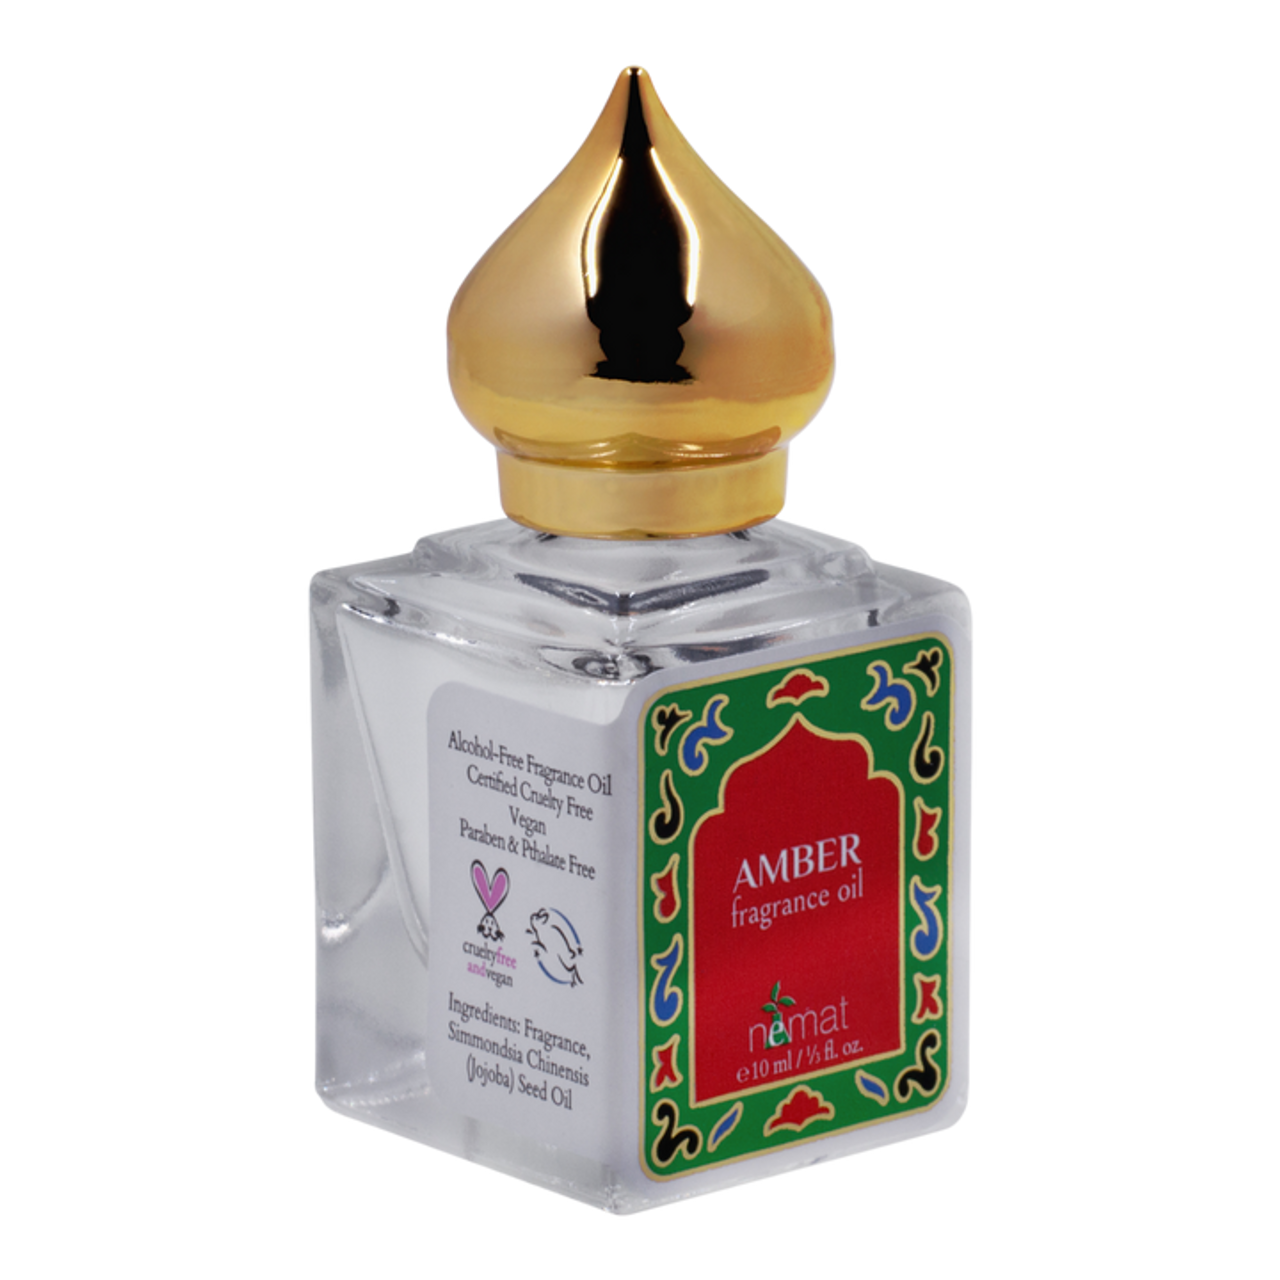 Vanilla Musk Eau De Parfum Spray 50 ml - Nemat Perfumes